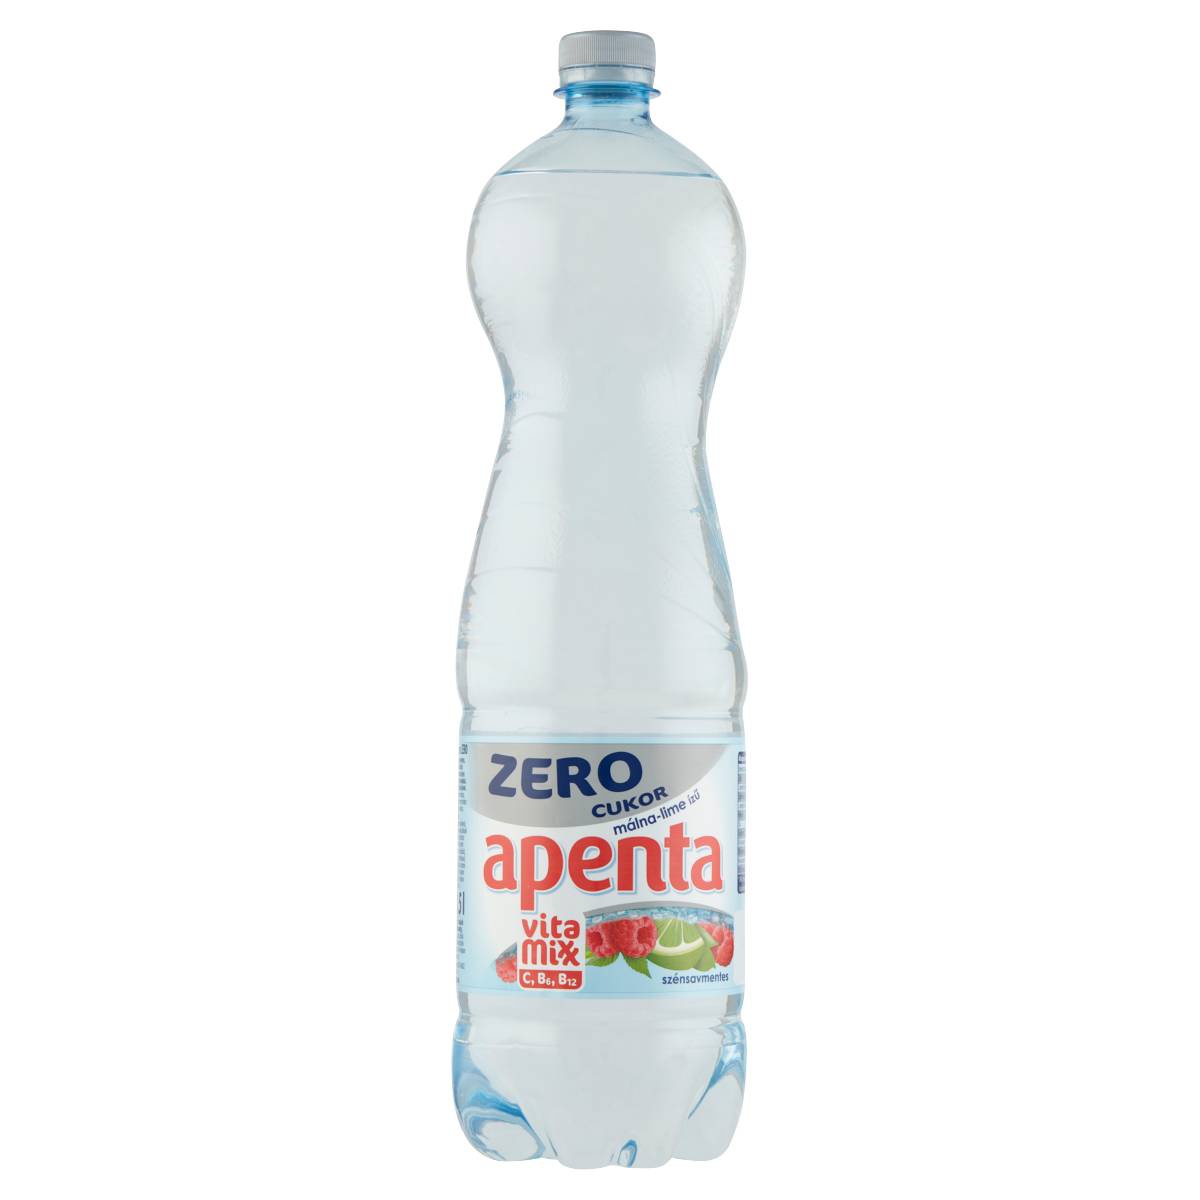 APENTA Vitamixx zero, málna-lime, 1,5 l